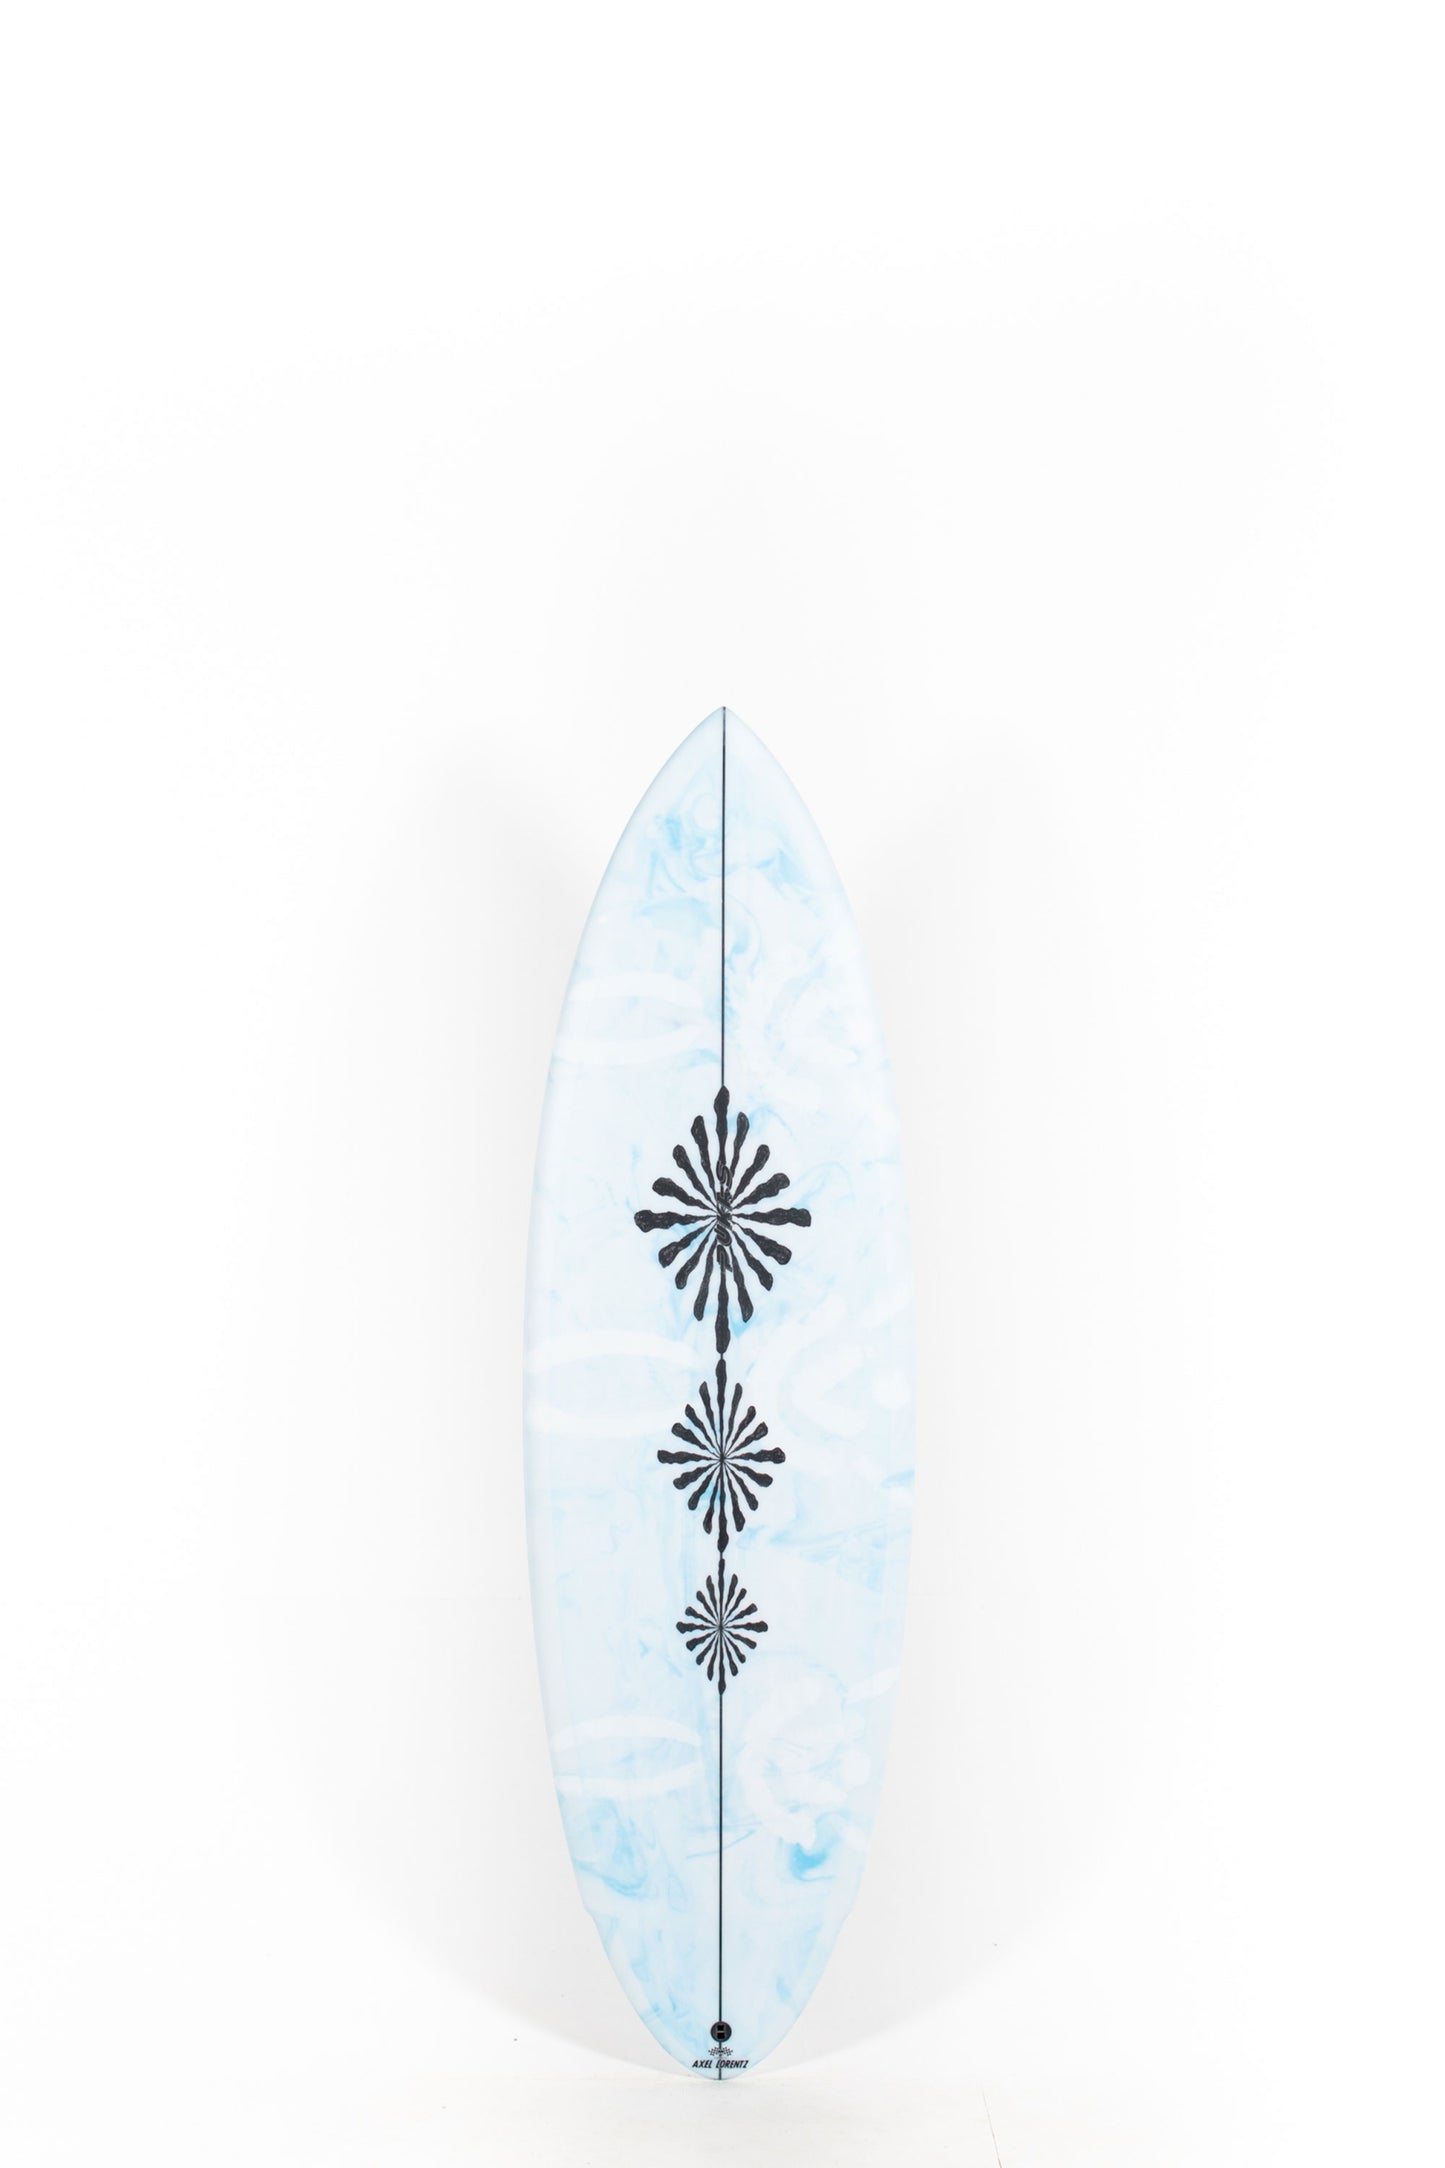 Pukas Surf Shop - Pukas Surfboards - ACID PLAN by Axel Lorentz -  5'11" x 20,5 x 2,55 x 33,91L - AX07952